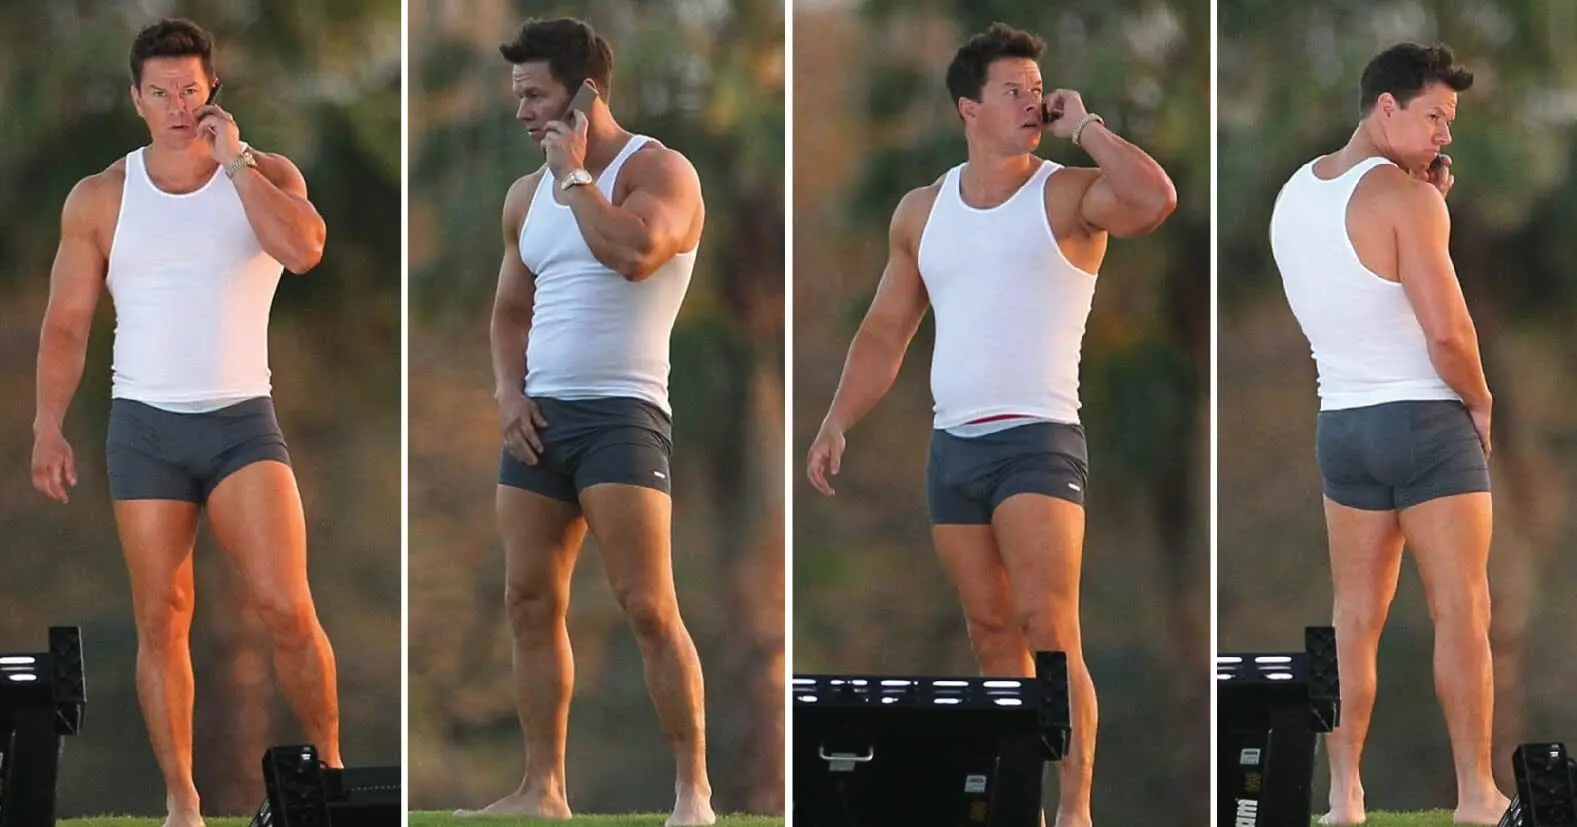 Mark Wahlberg underwear and big bulge